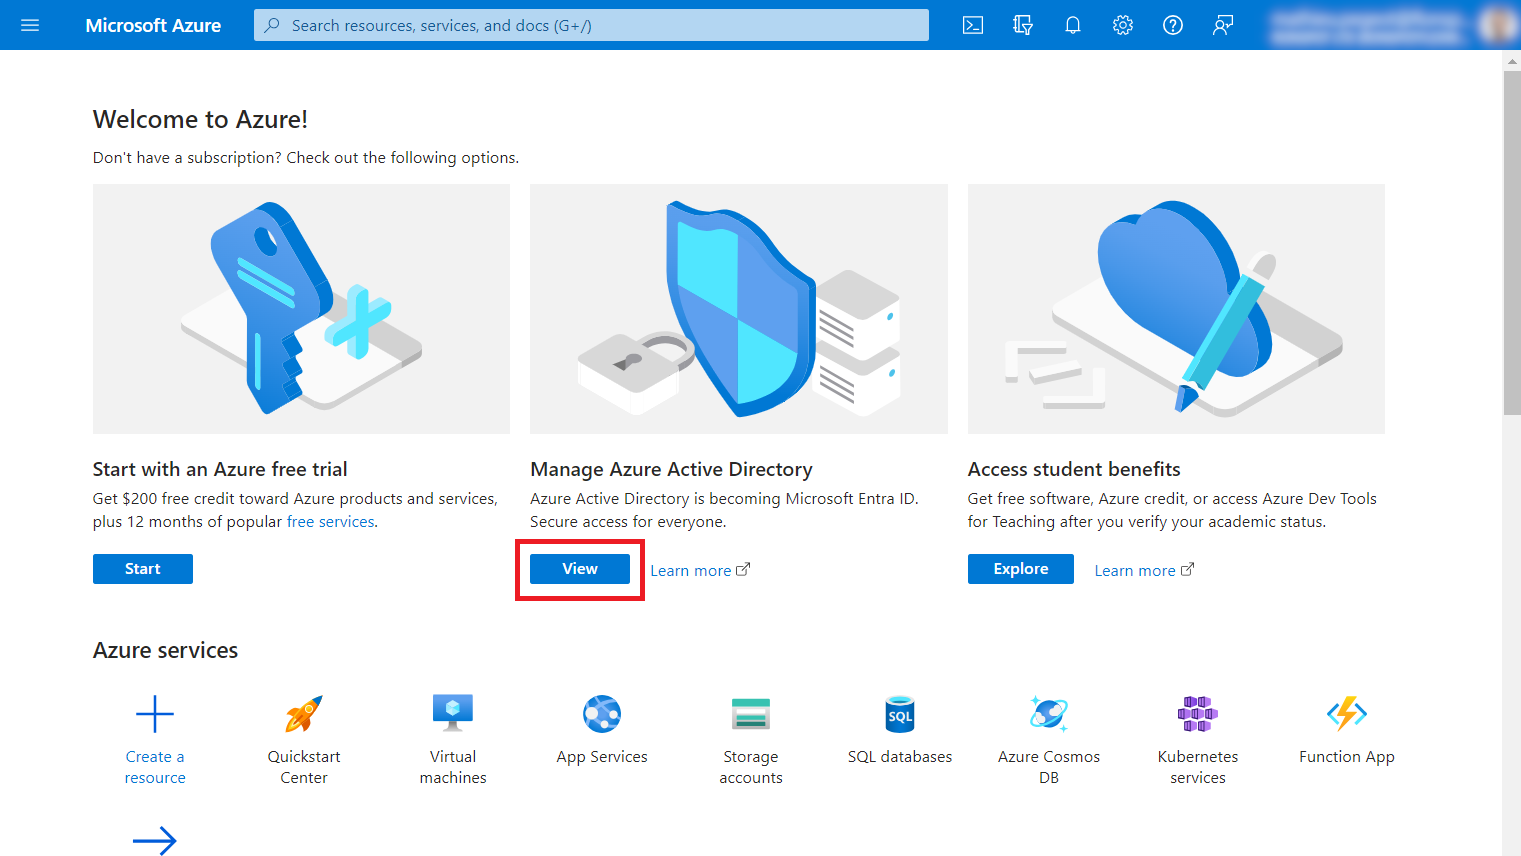 Azure AD - Manage Azure Active Directory